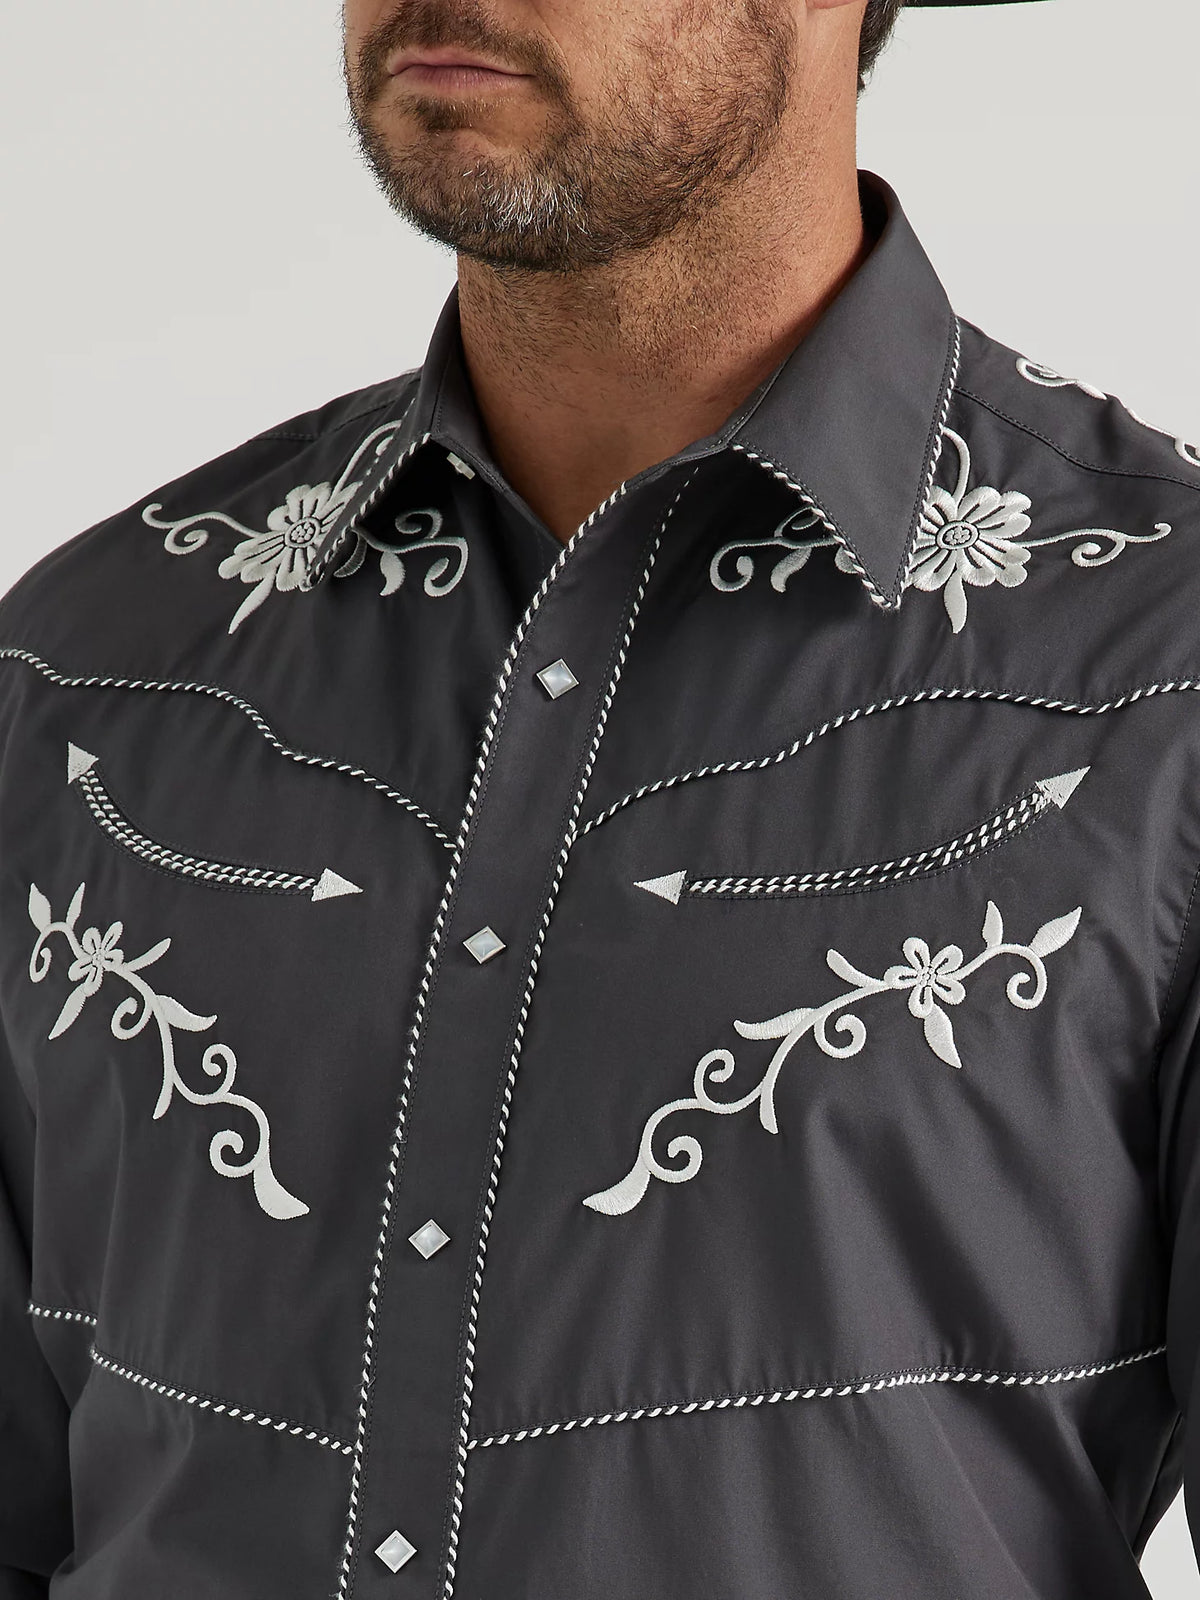 Wrangler Western Pearl Snap Short Sleeve Shirt Men's Medium Black & Gray  Quality